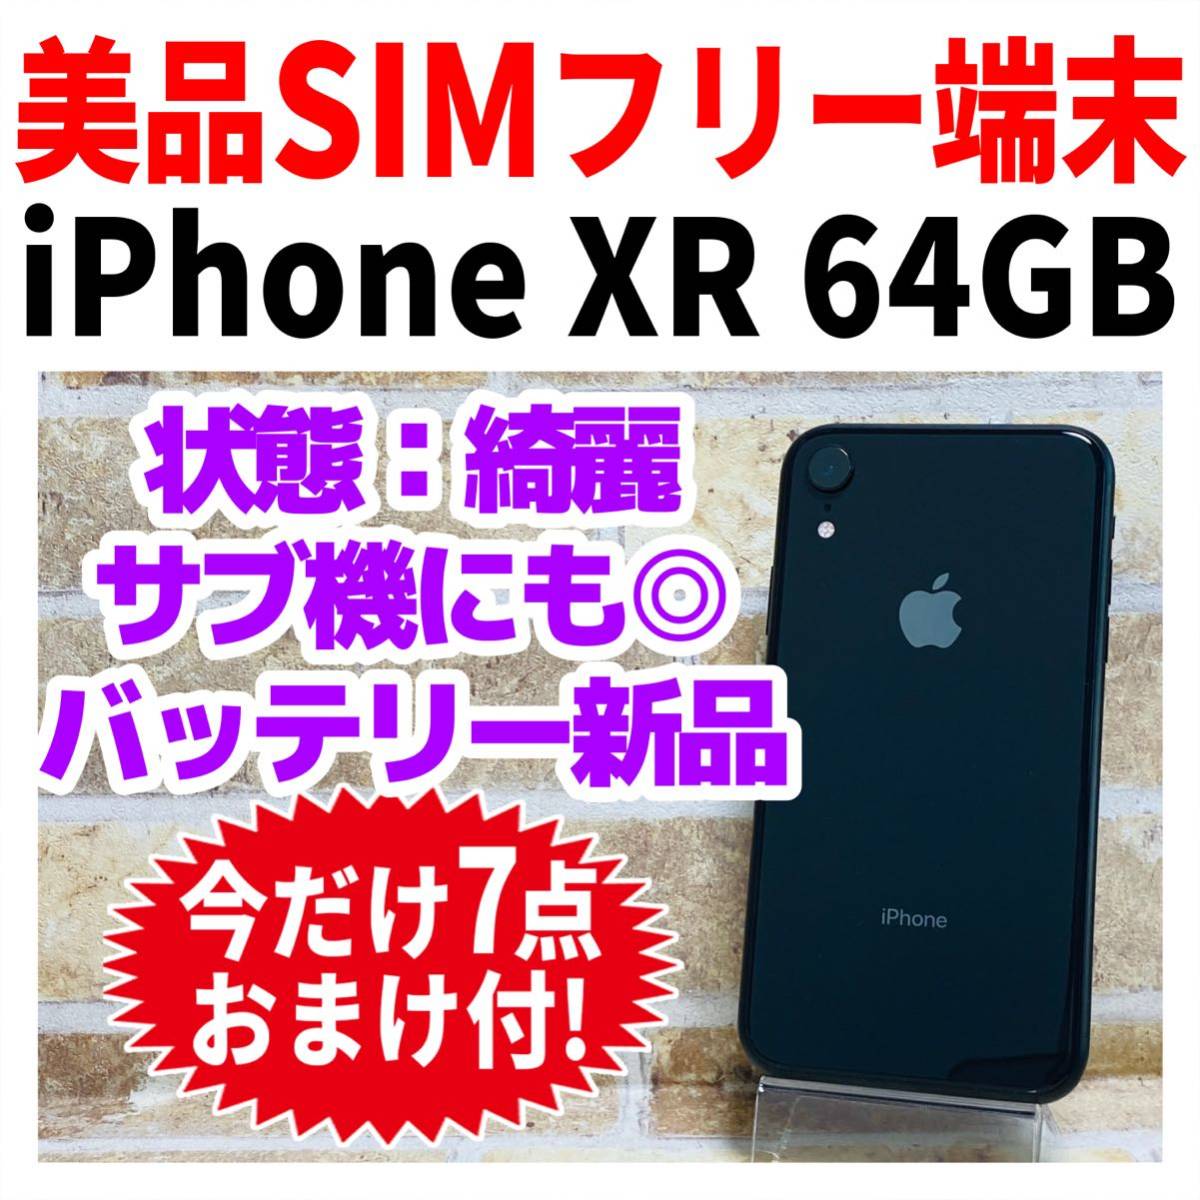 iPhone XR Black 64 GB SIMフリー 本体のみ 通販 サイト sandorobotics.com